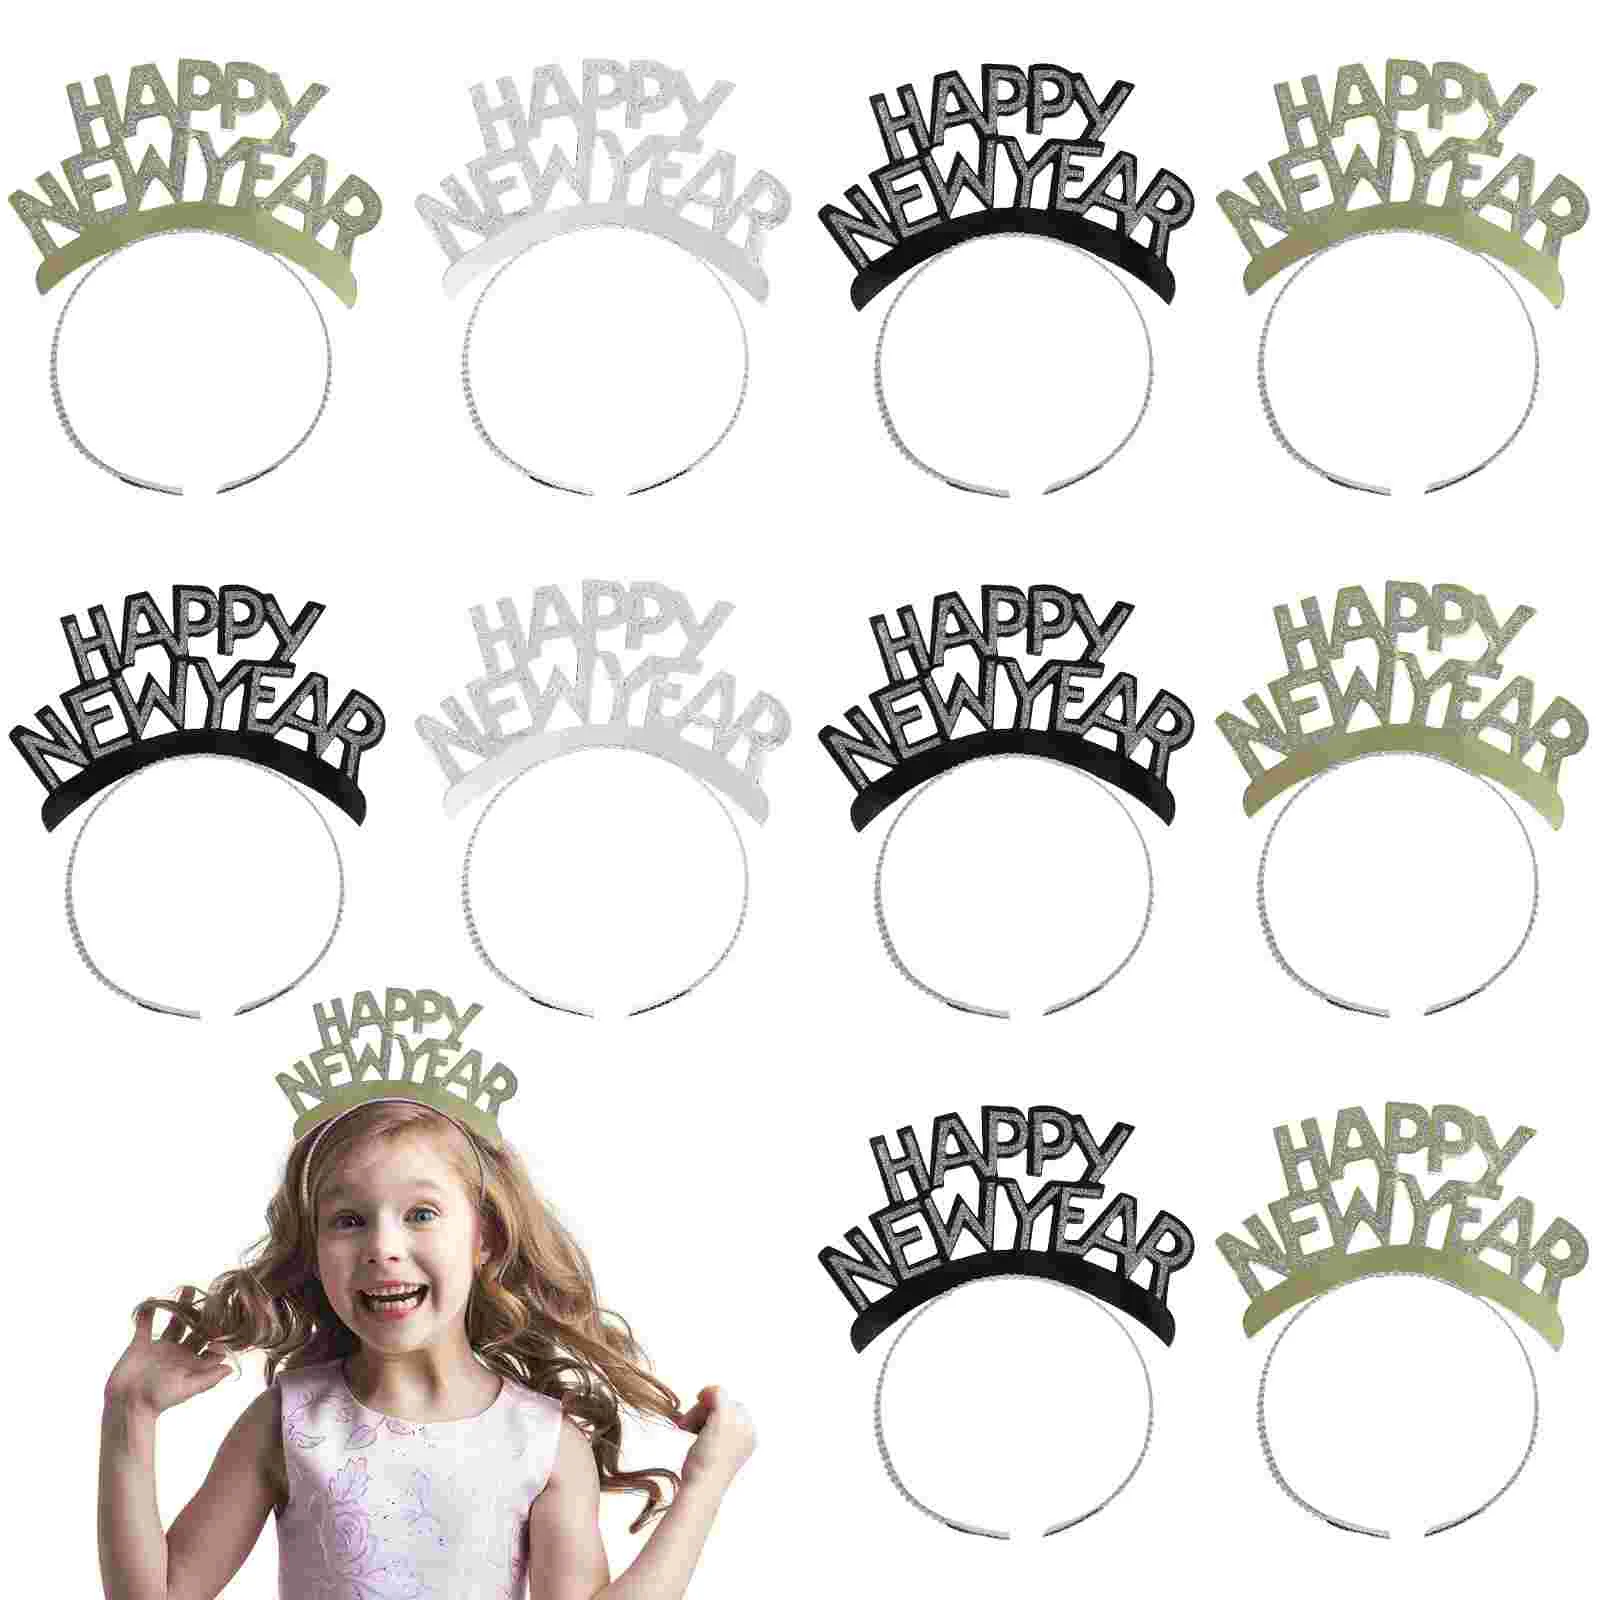 

TINKSKY 12Pcs HAPPY NEW YEAR Hair Clasp Headband Aluminum Foil New Year Party Decorations Tiara